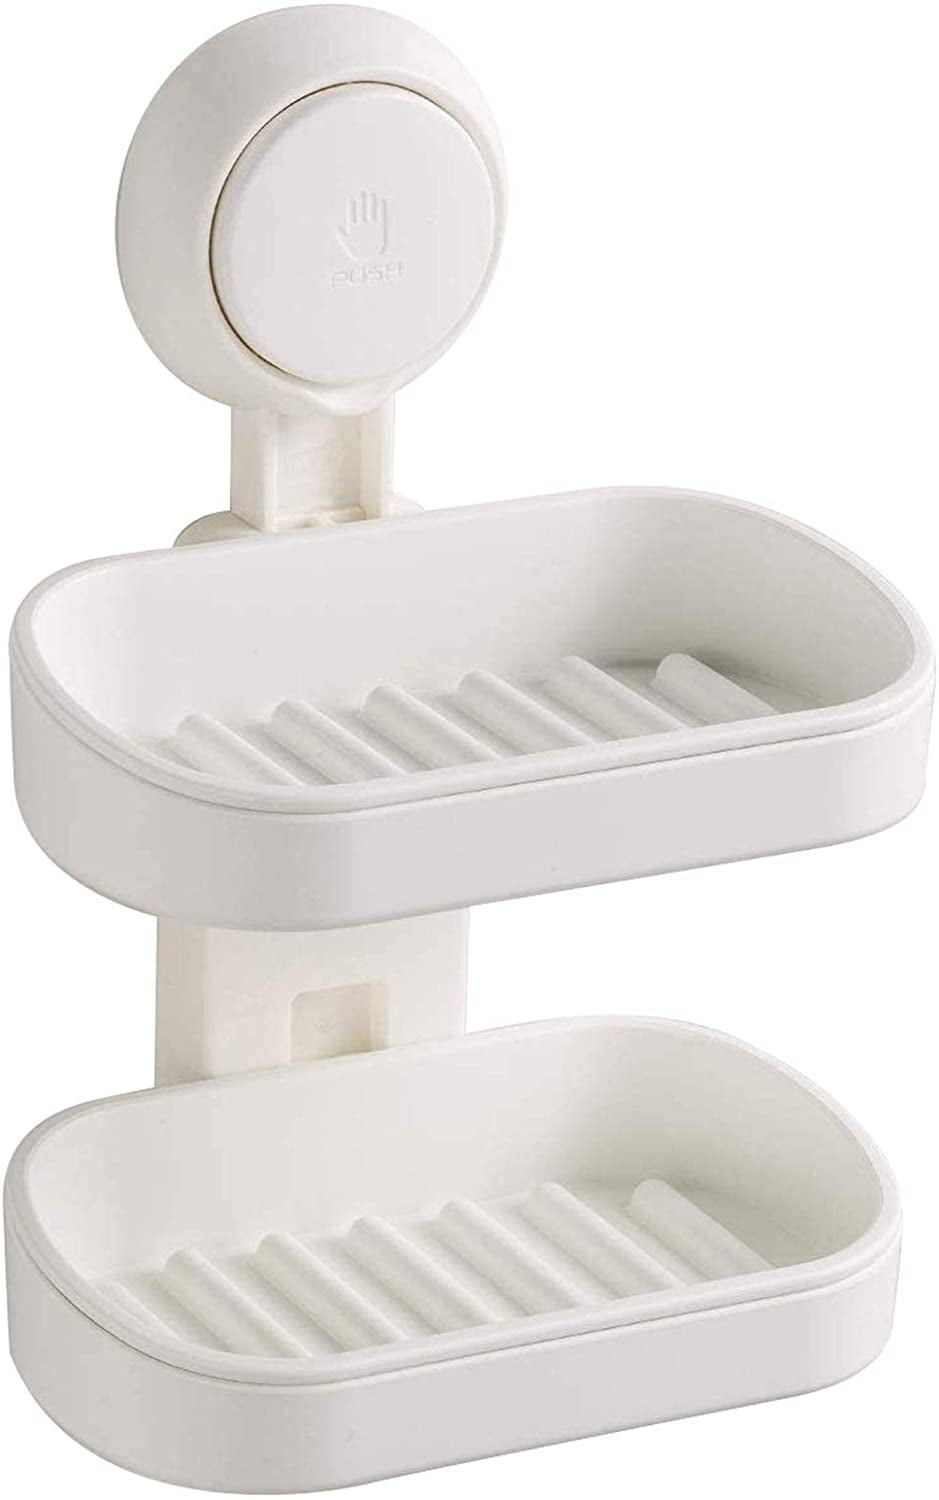 Plastic Soap Dish Soap For Bathroom Kitchen Drain Hole Tray Organizer Funny 